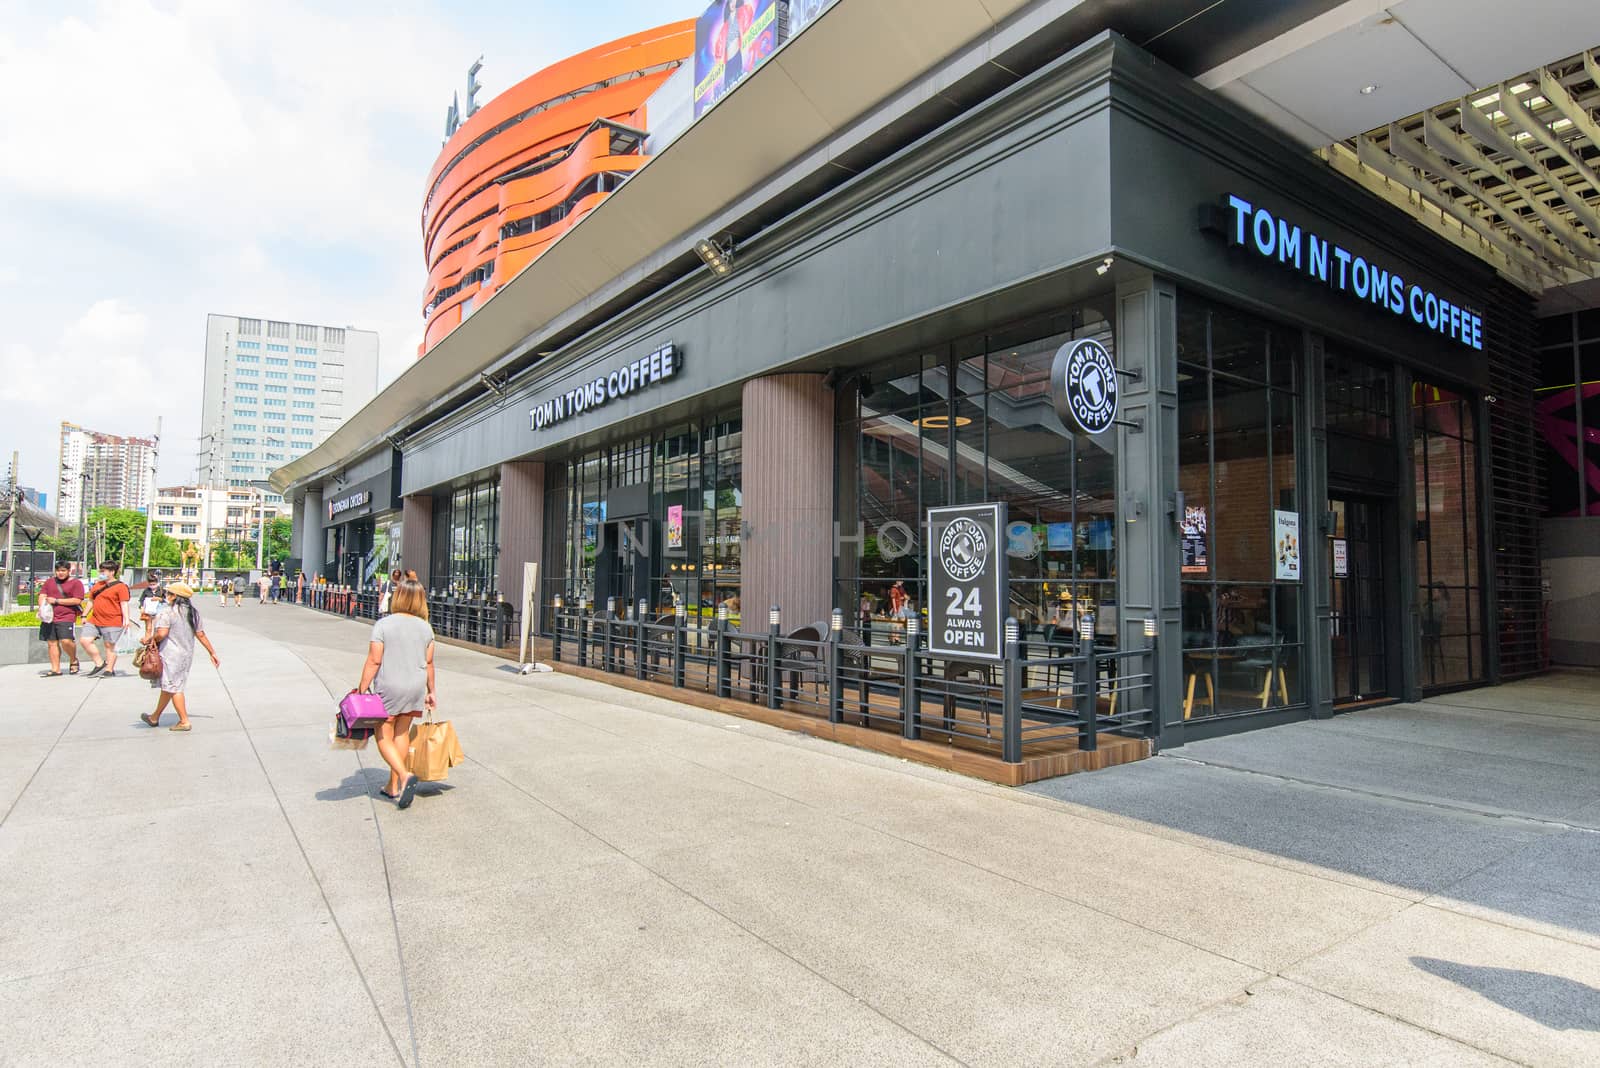 tom n toms cafe shop front side at Seacon Bangkae shopping mall by rukawajung